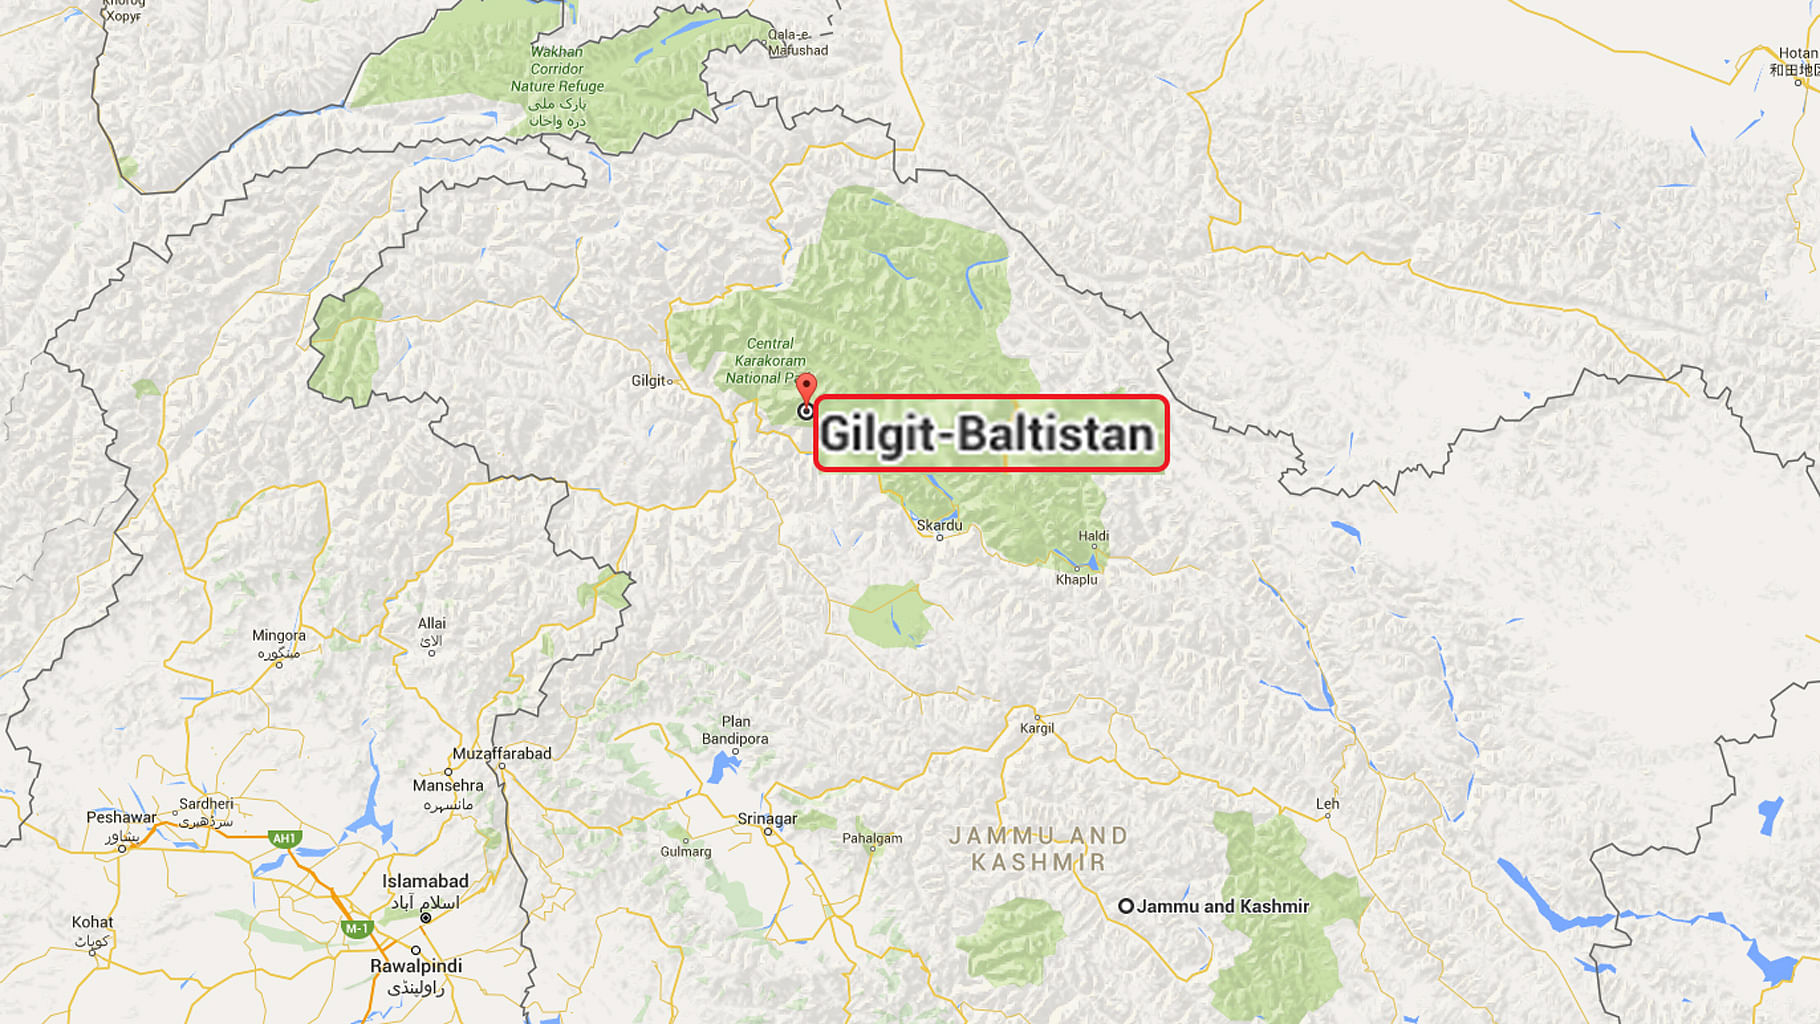 MEA Condemns ‘Damage’ of Buddhist Heritage in Gilgit-Baltistan. Gilgit-Baltistan.